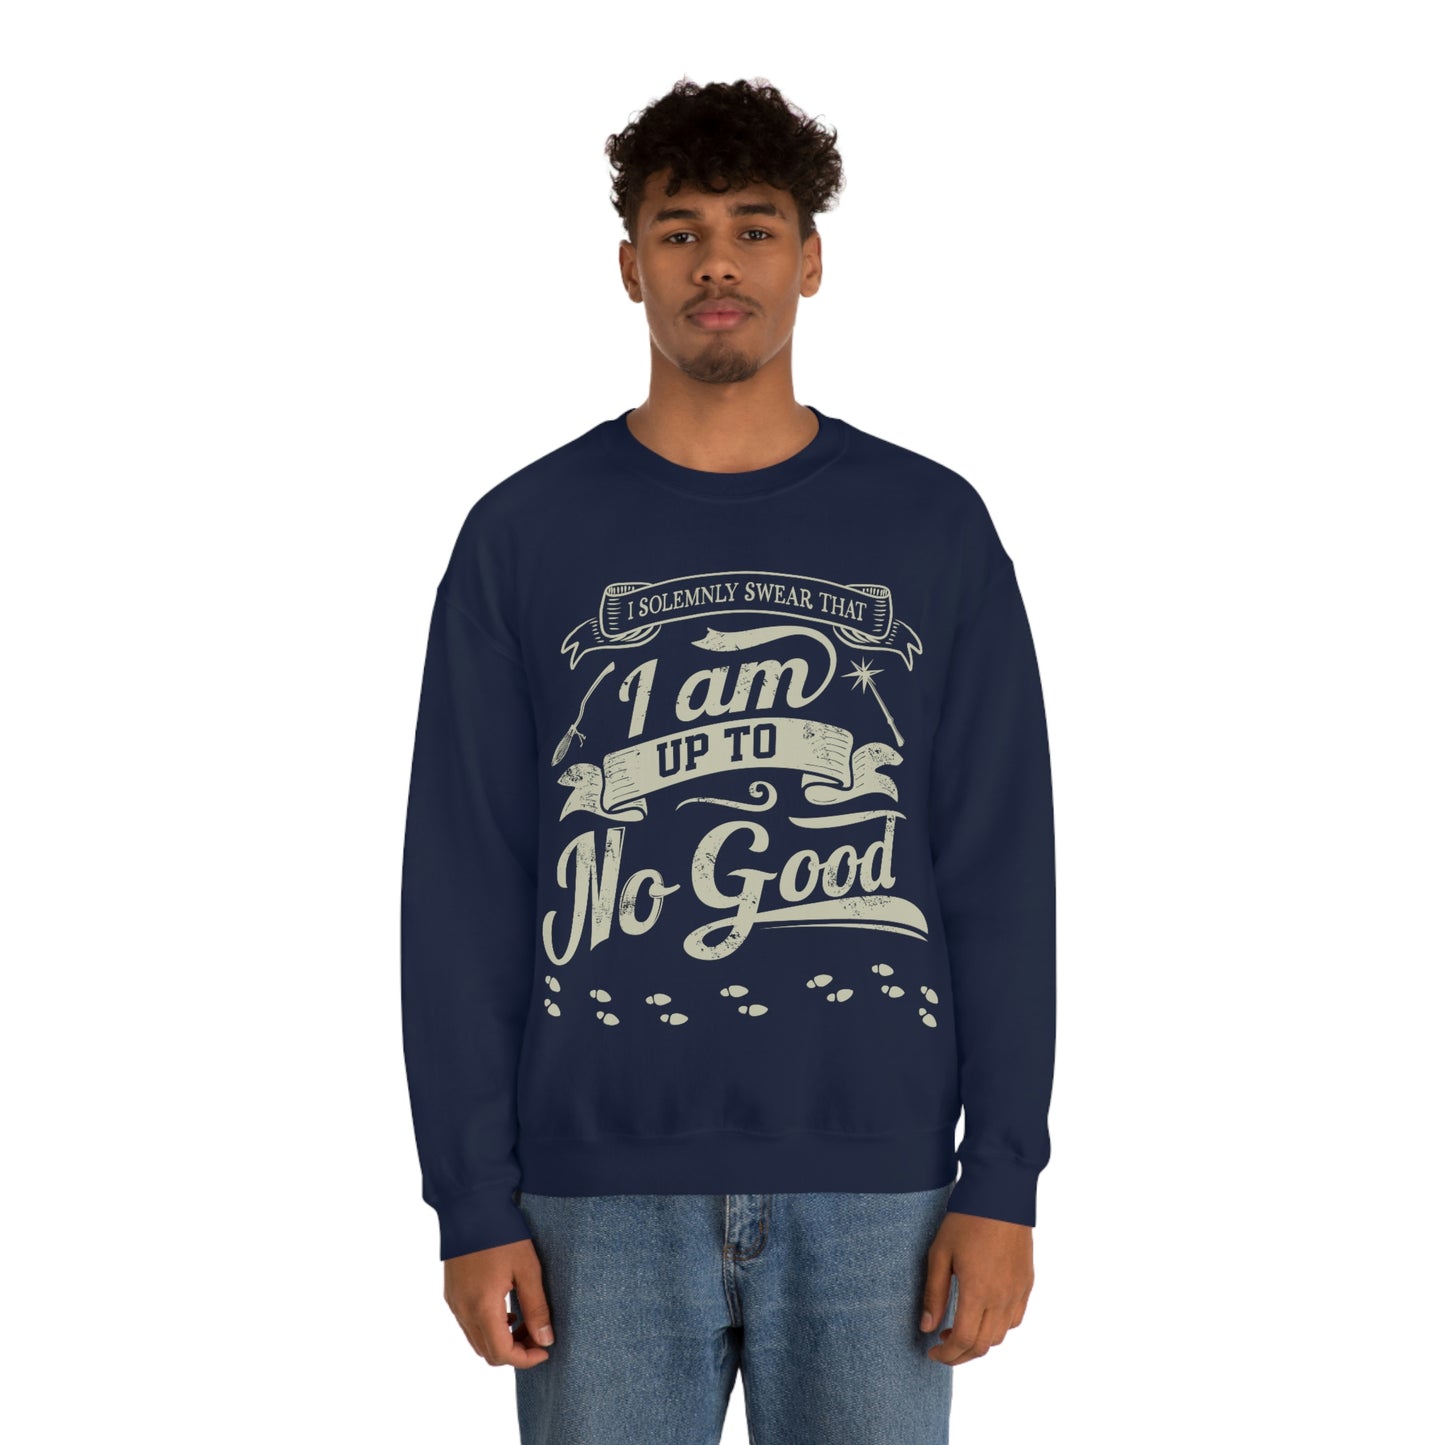 I solemnly swear - Adult Crewneck Sweatshirt